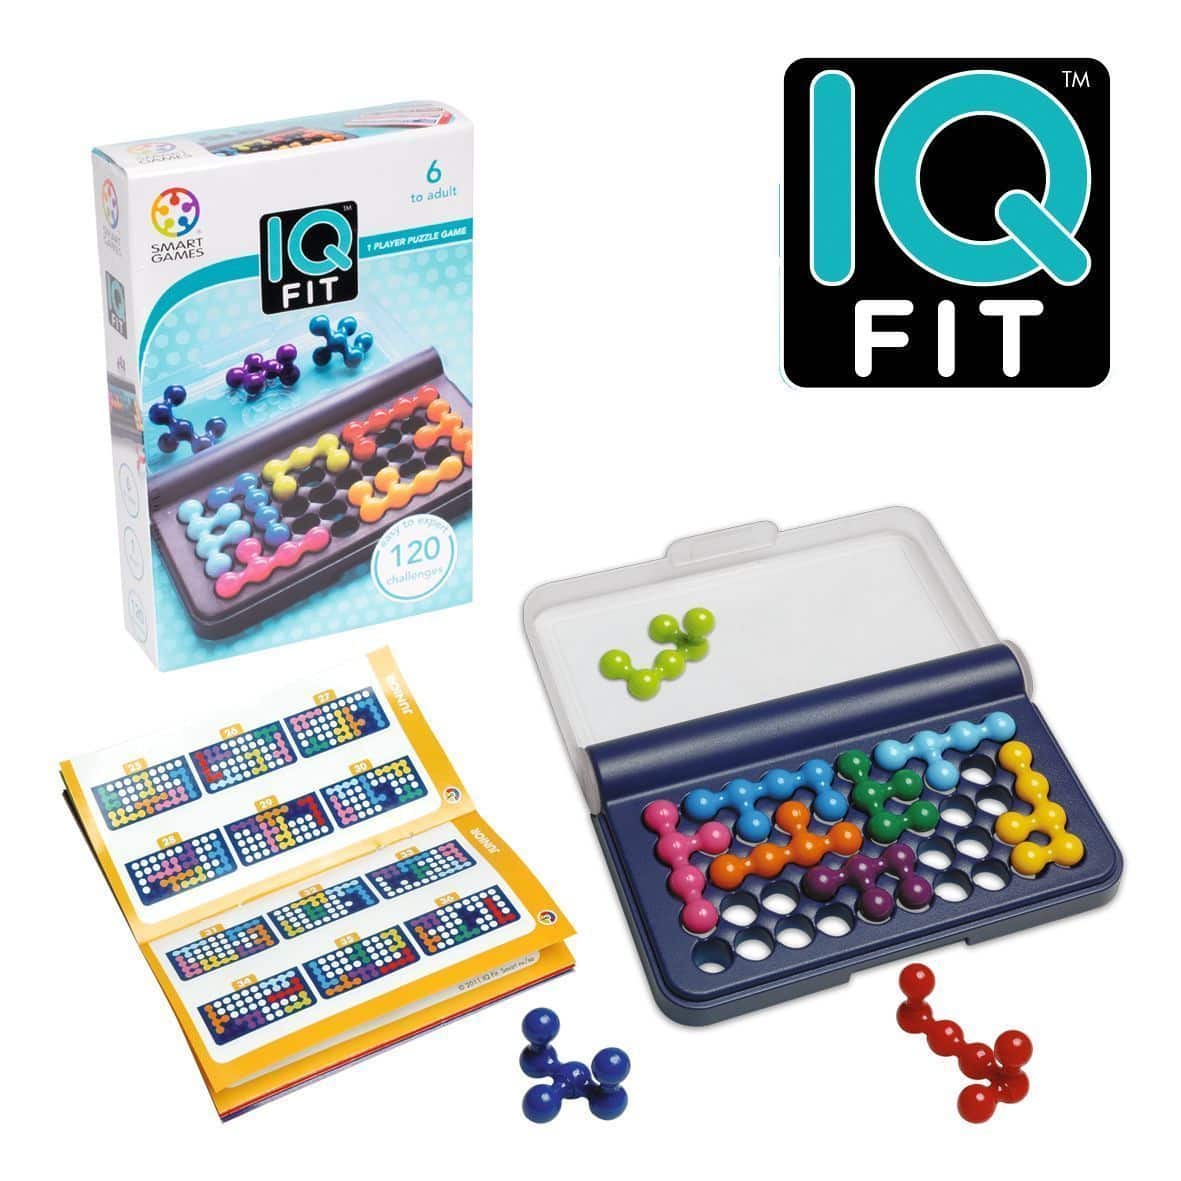 IQ Fit- Smart games